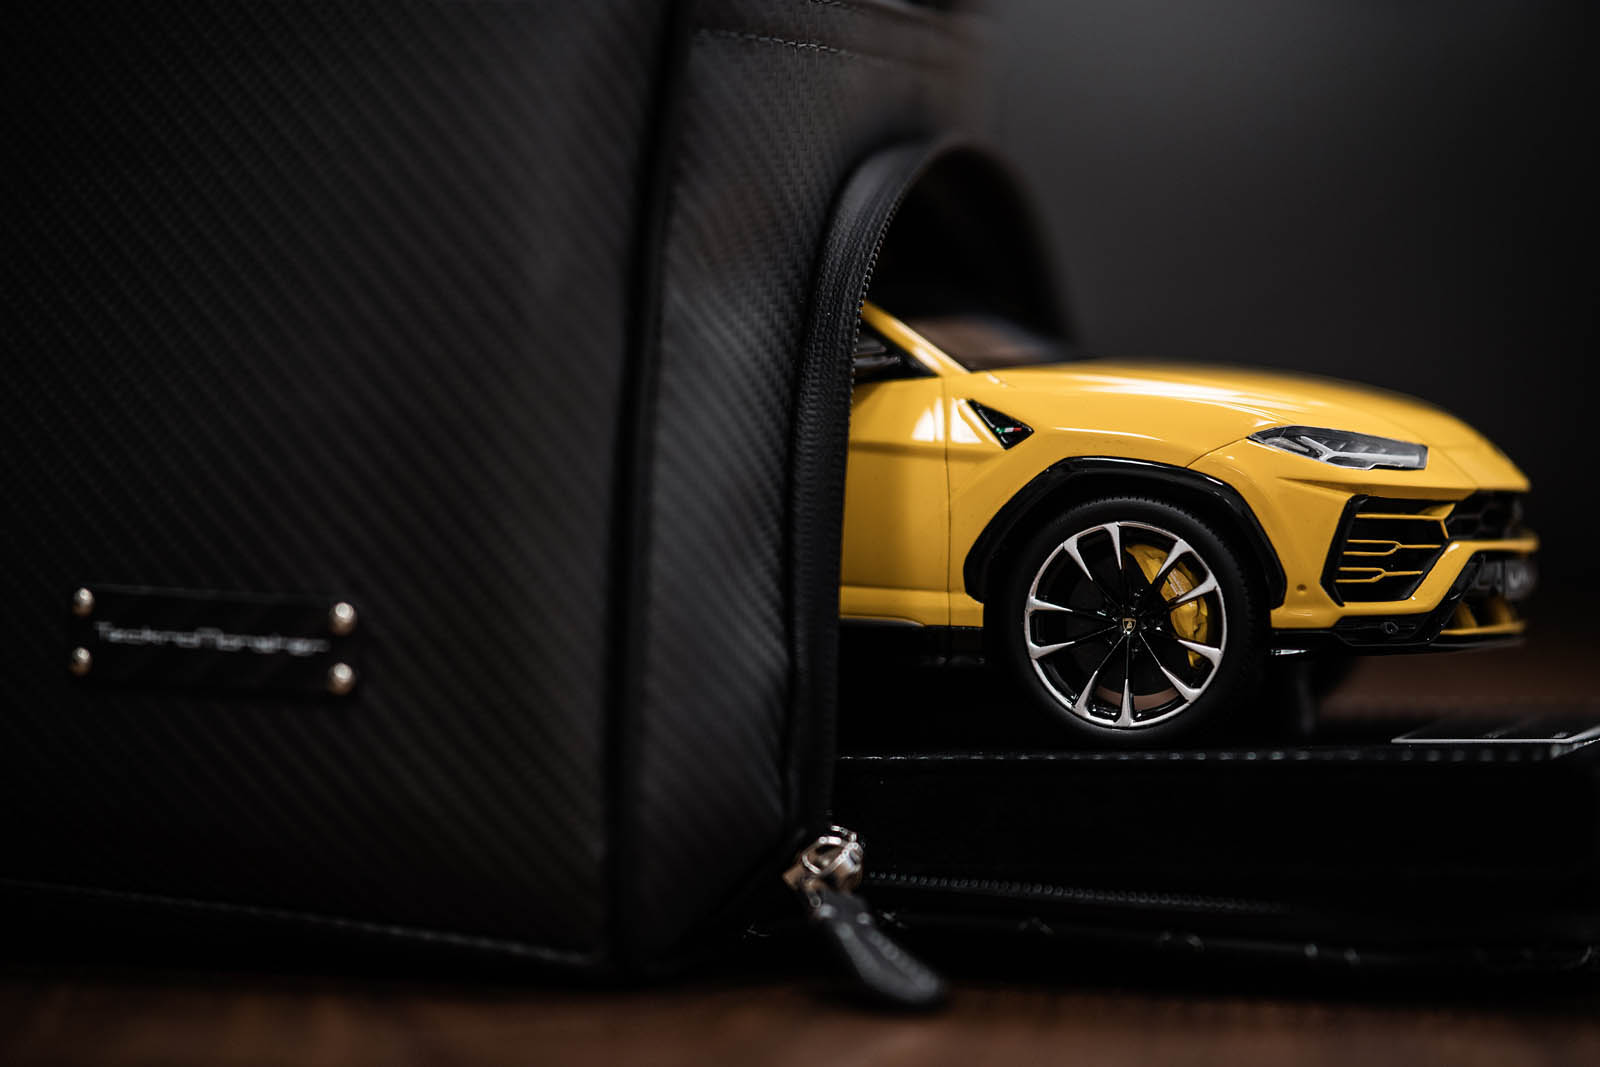 Lamborghini Releases Urus Accessories to Match the Vehicle